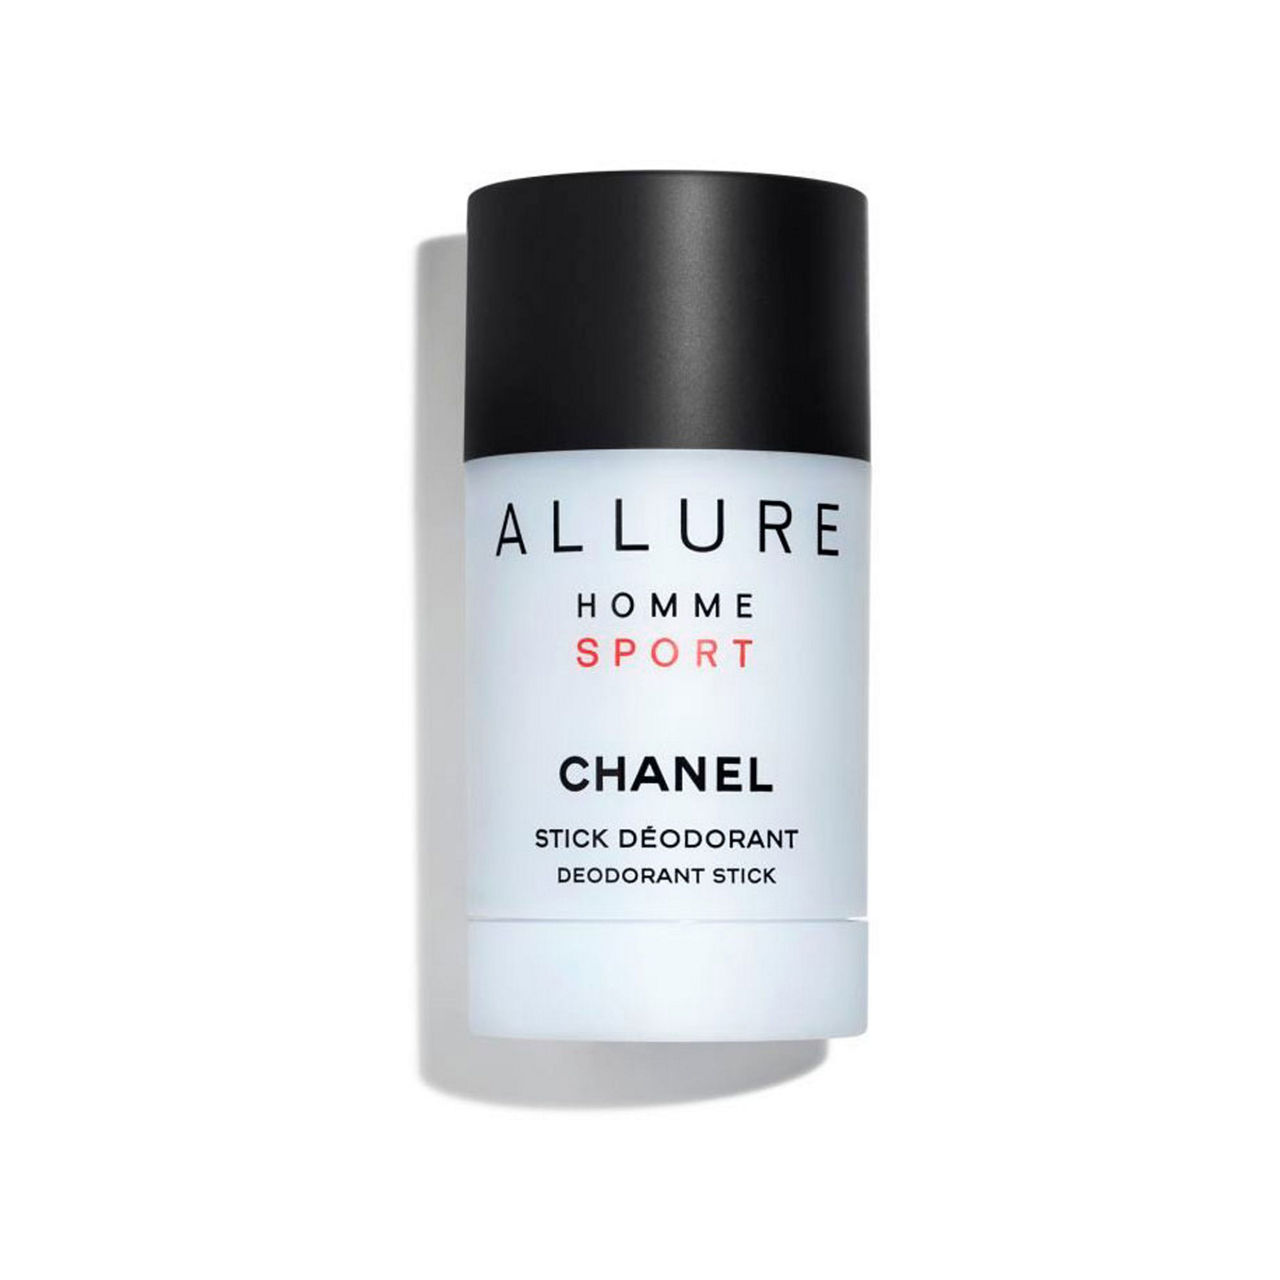 Chanel Allure deodorant, Beauty & Personal Care, Fragrance